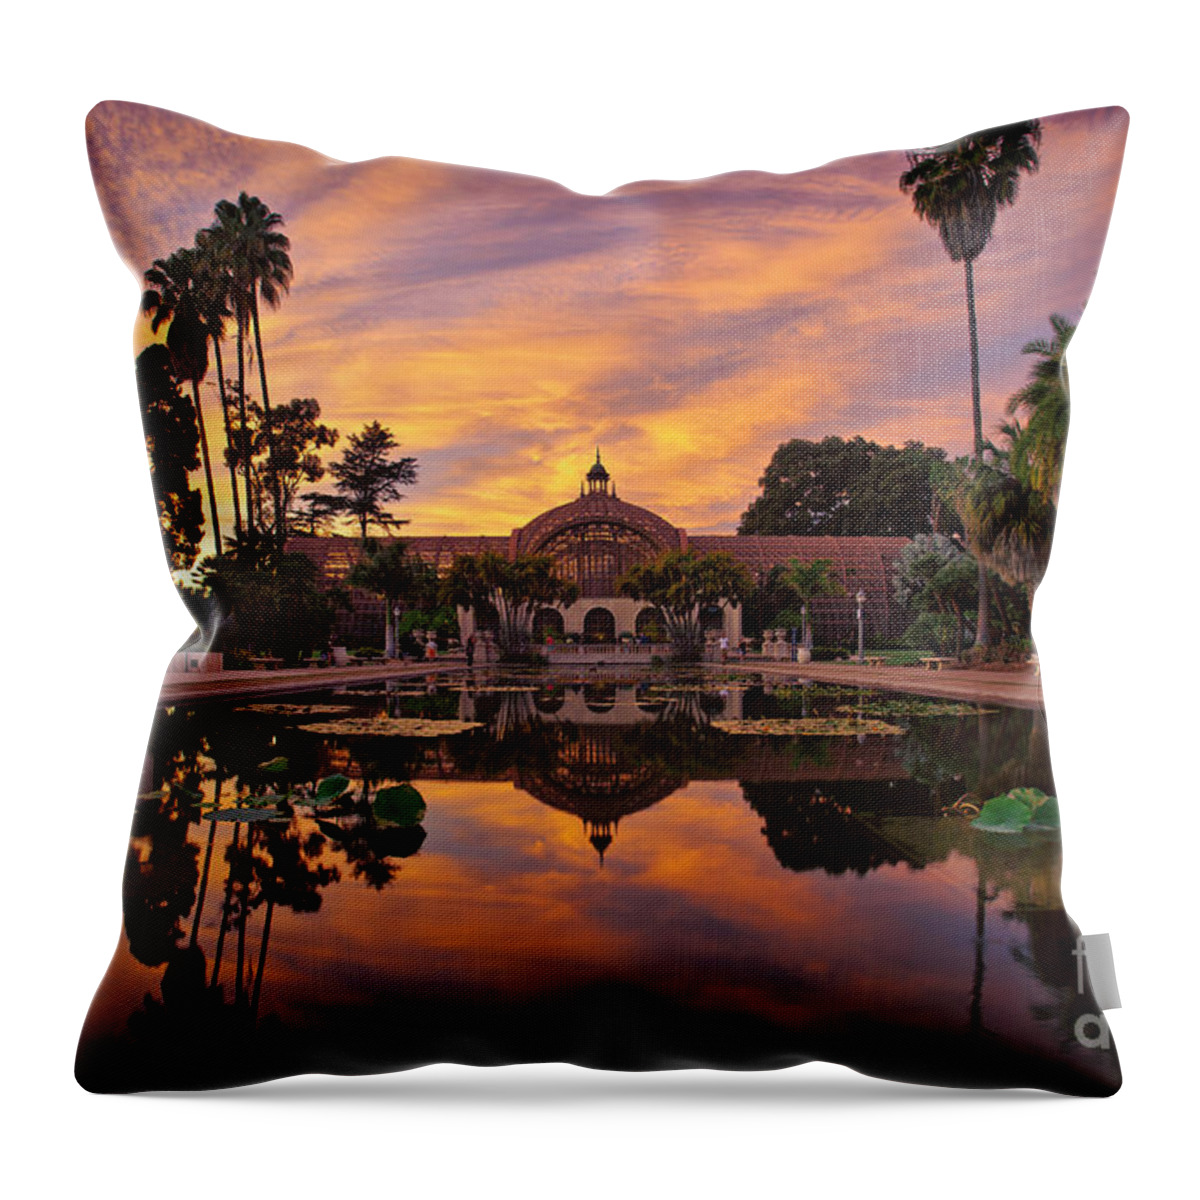 Balboa Park Throw Pillow featuring the photograph Balboa Park Botanical Building Sunset by Sam Antonio